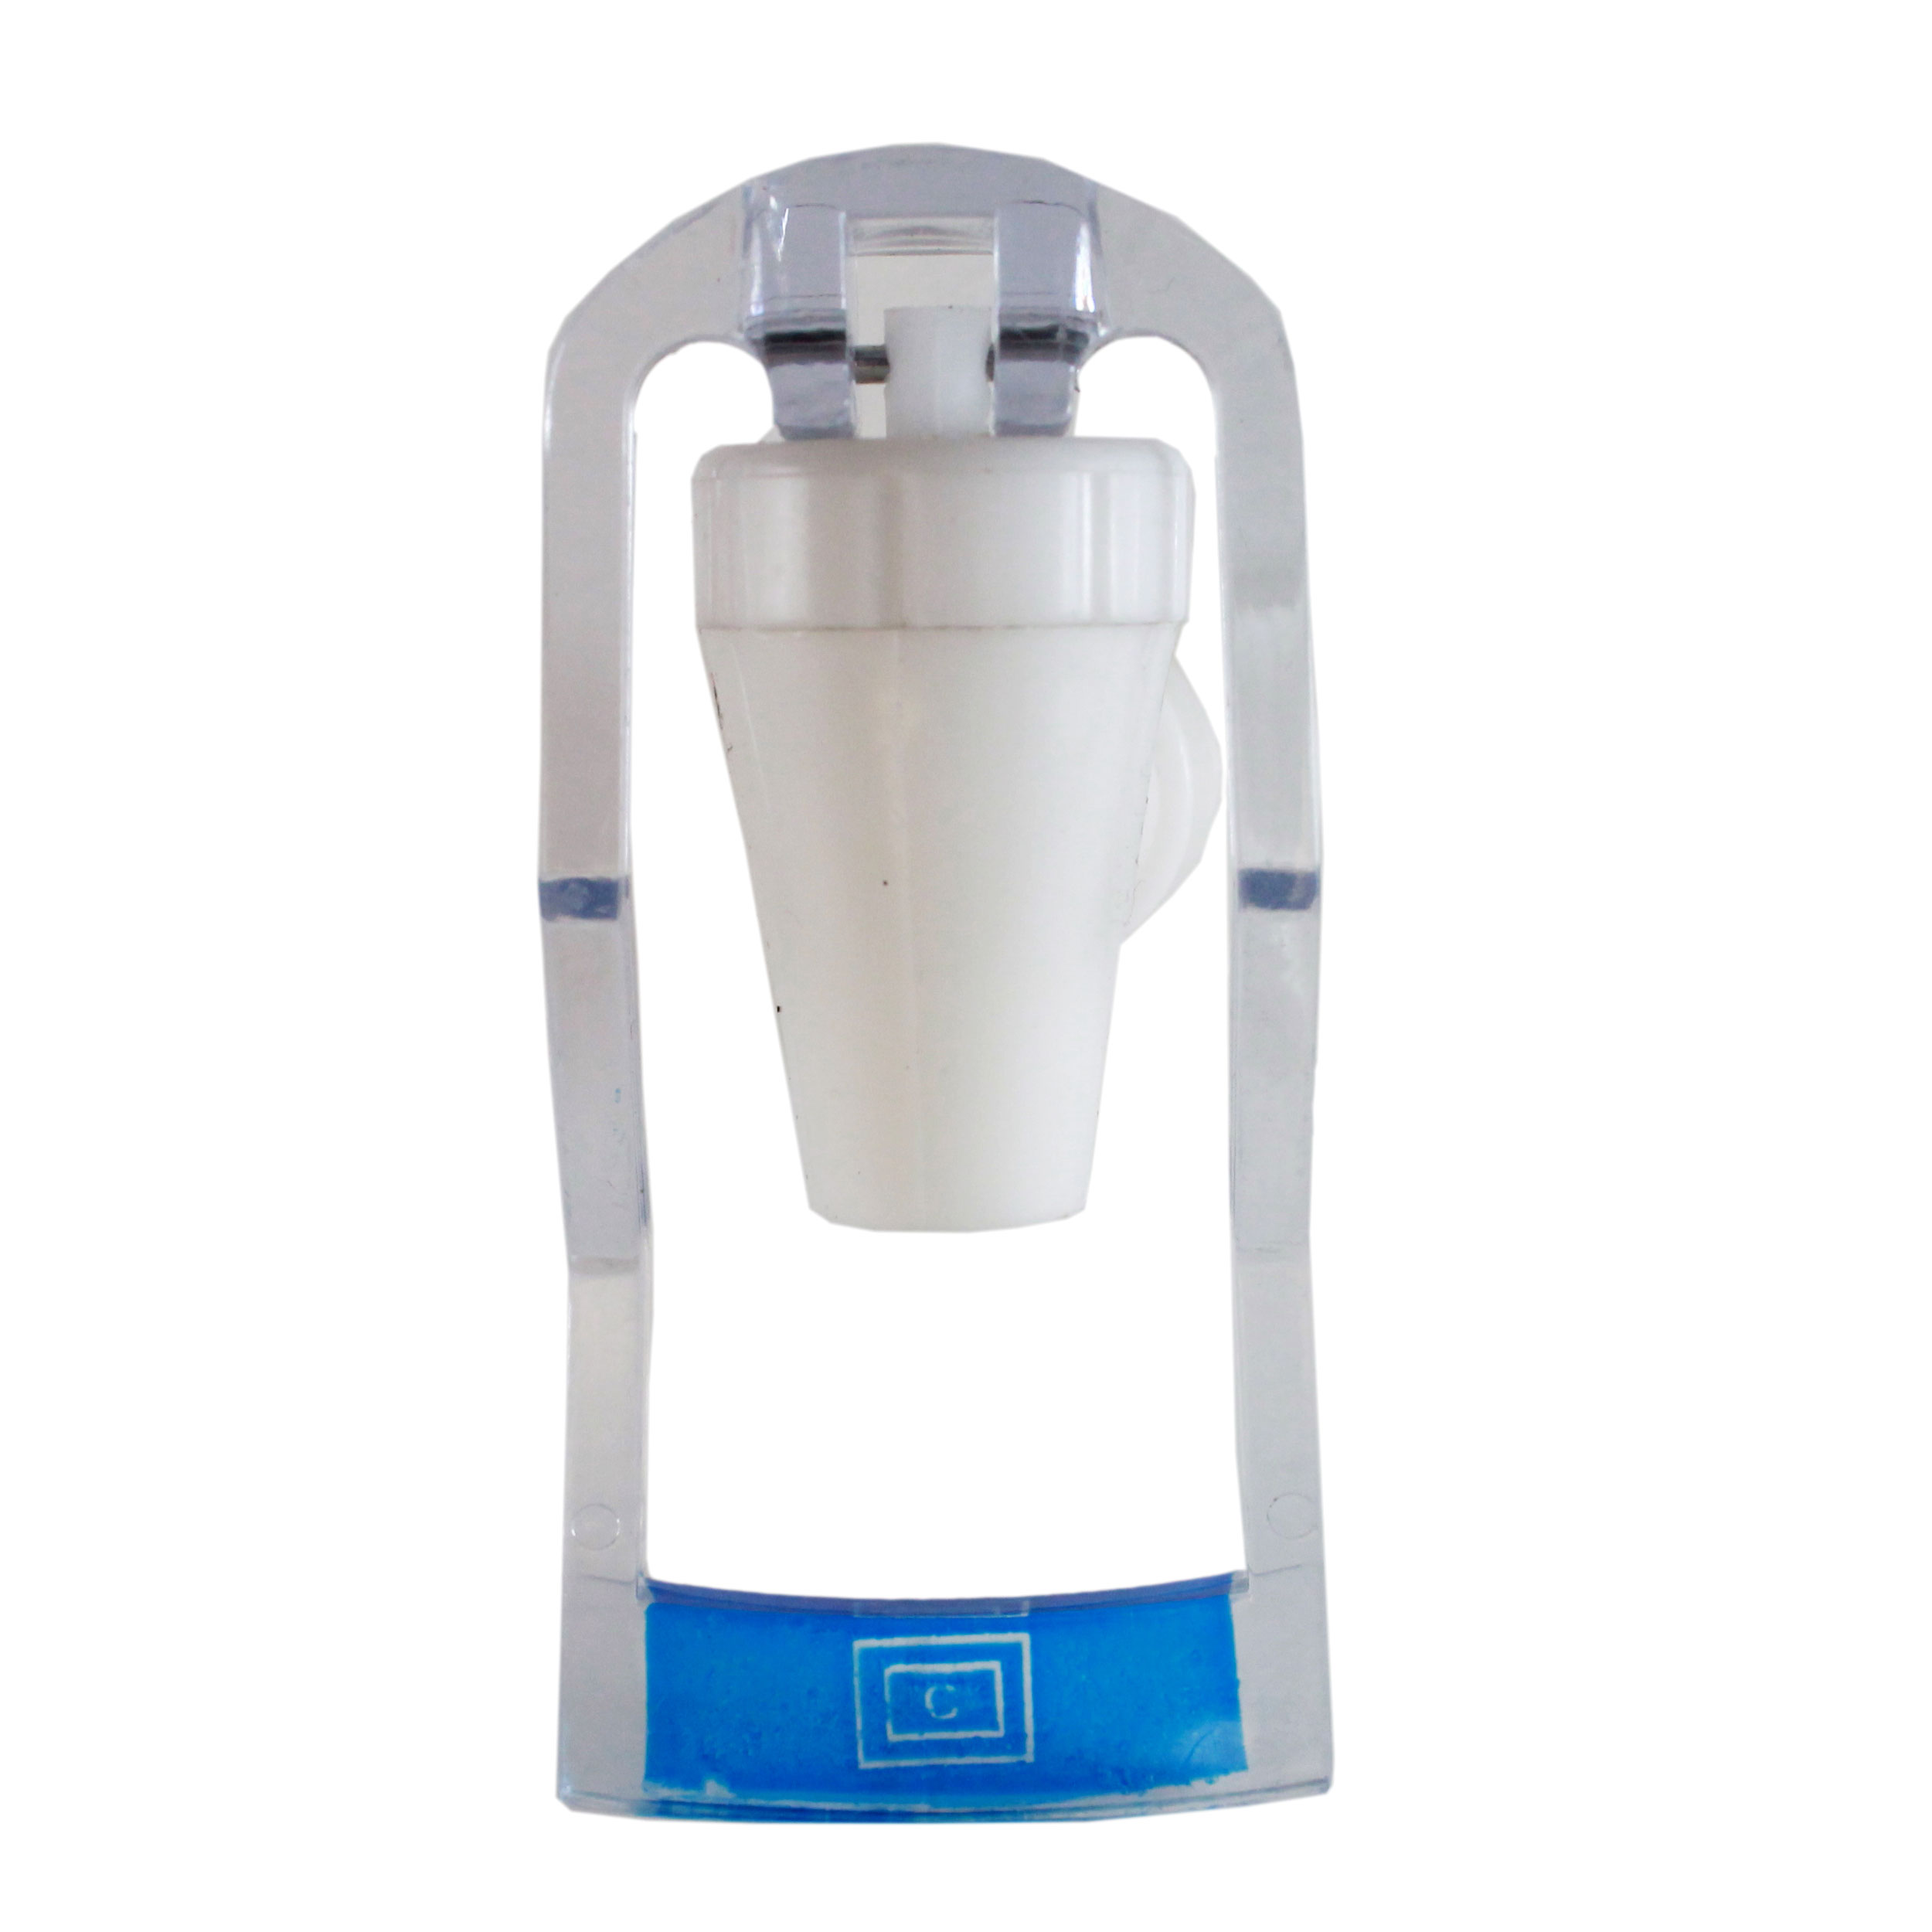 شیر آبسردکن مدل DN-4000330